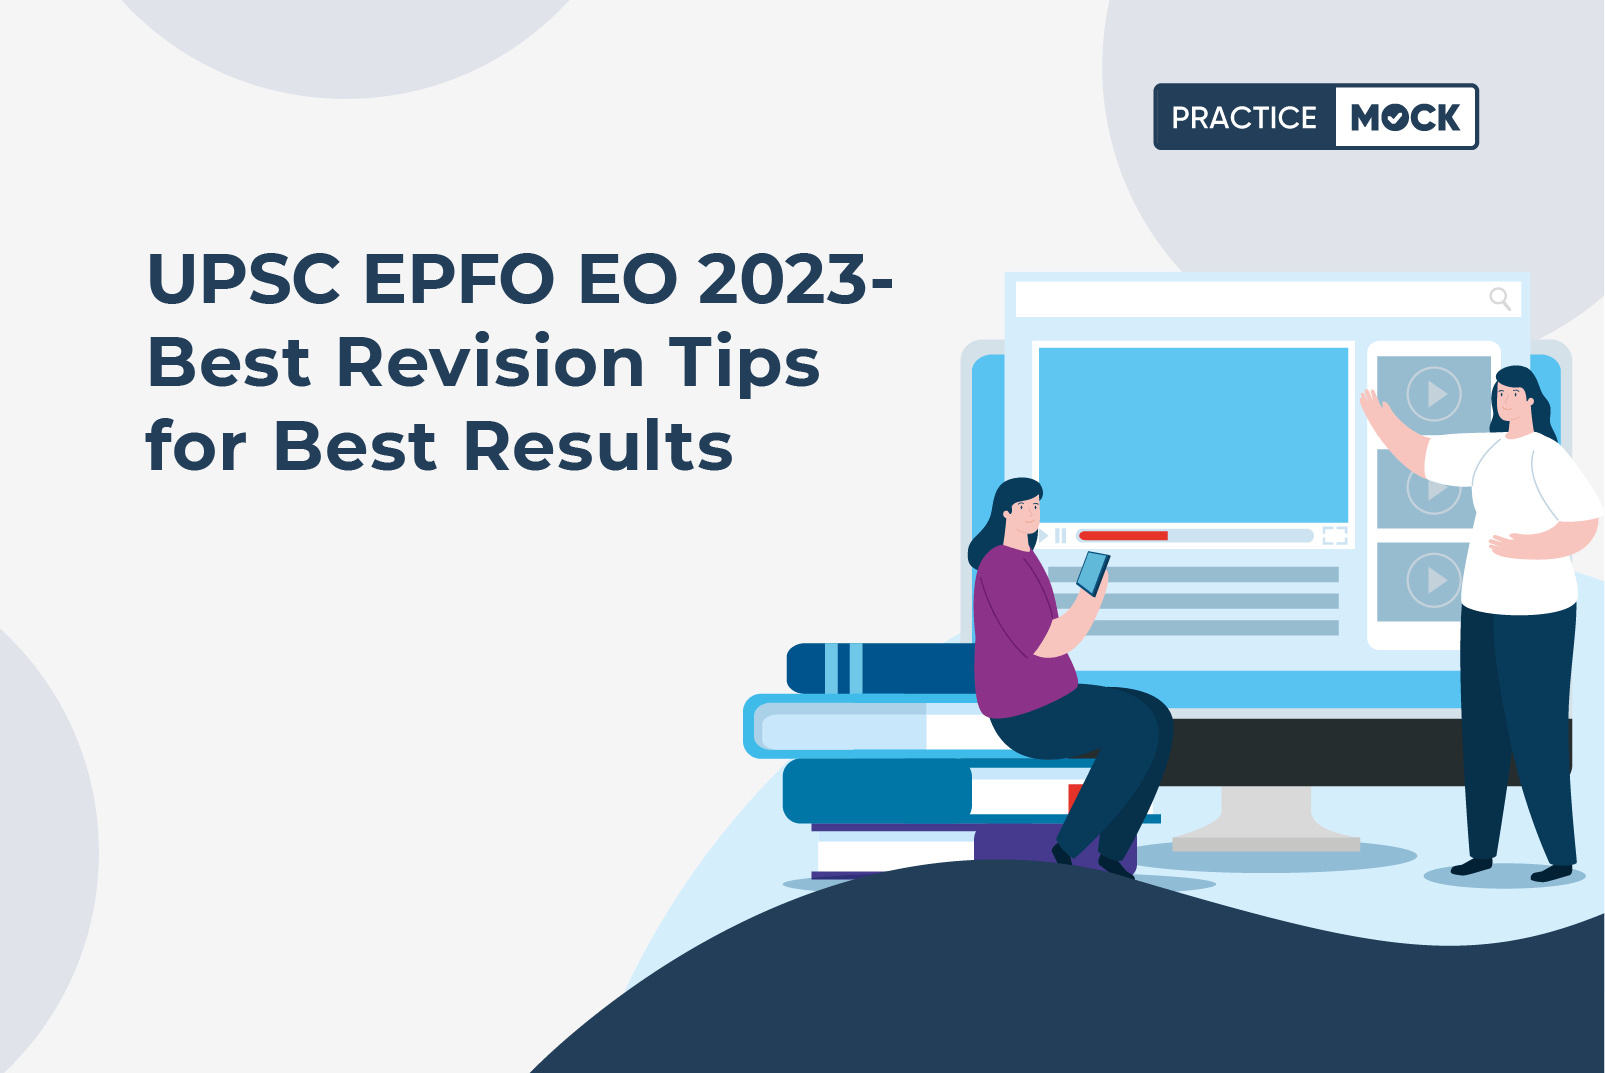 UPSC EPFO EO 2023-10 Days Mock Test Challenge & Exam Strategy